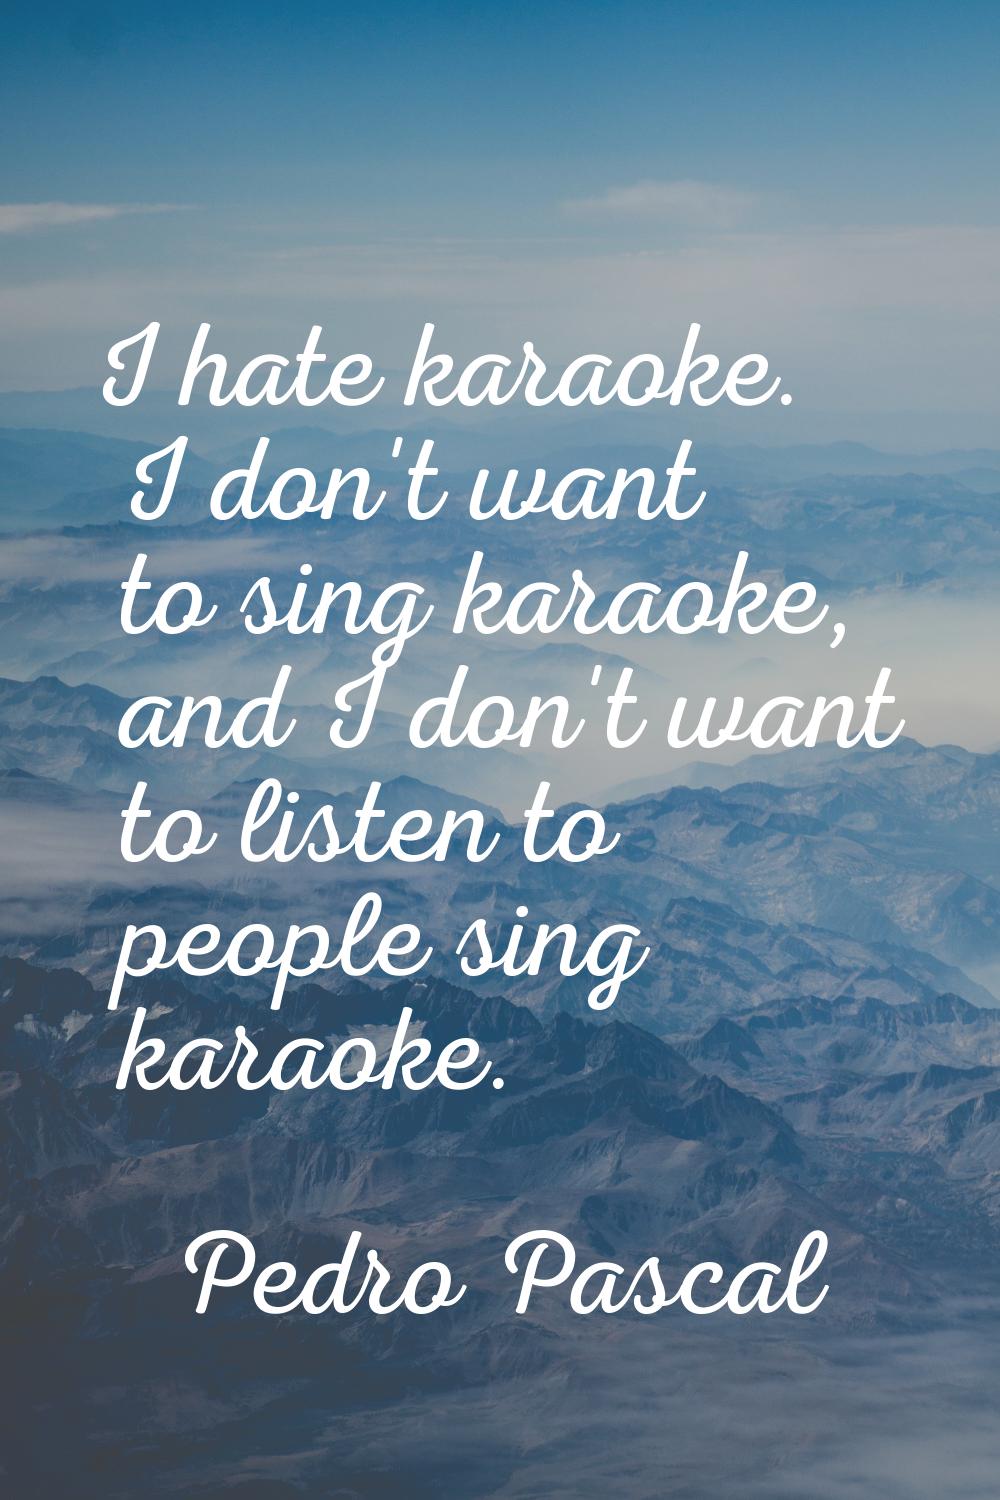 I hate karaoke. I don't want to sing karaoke, and I don't want to listen to people sing karaoke.